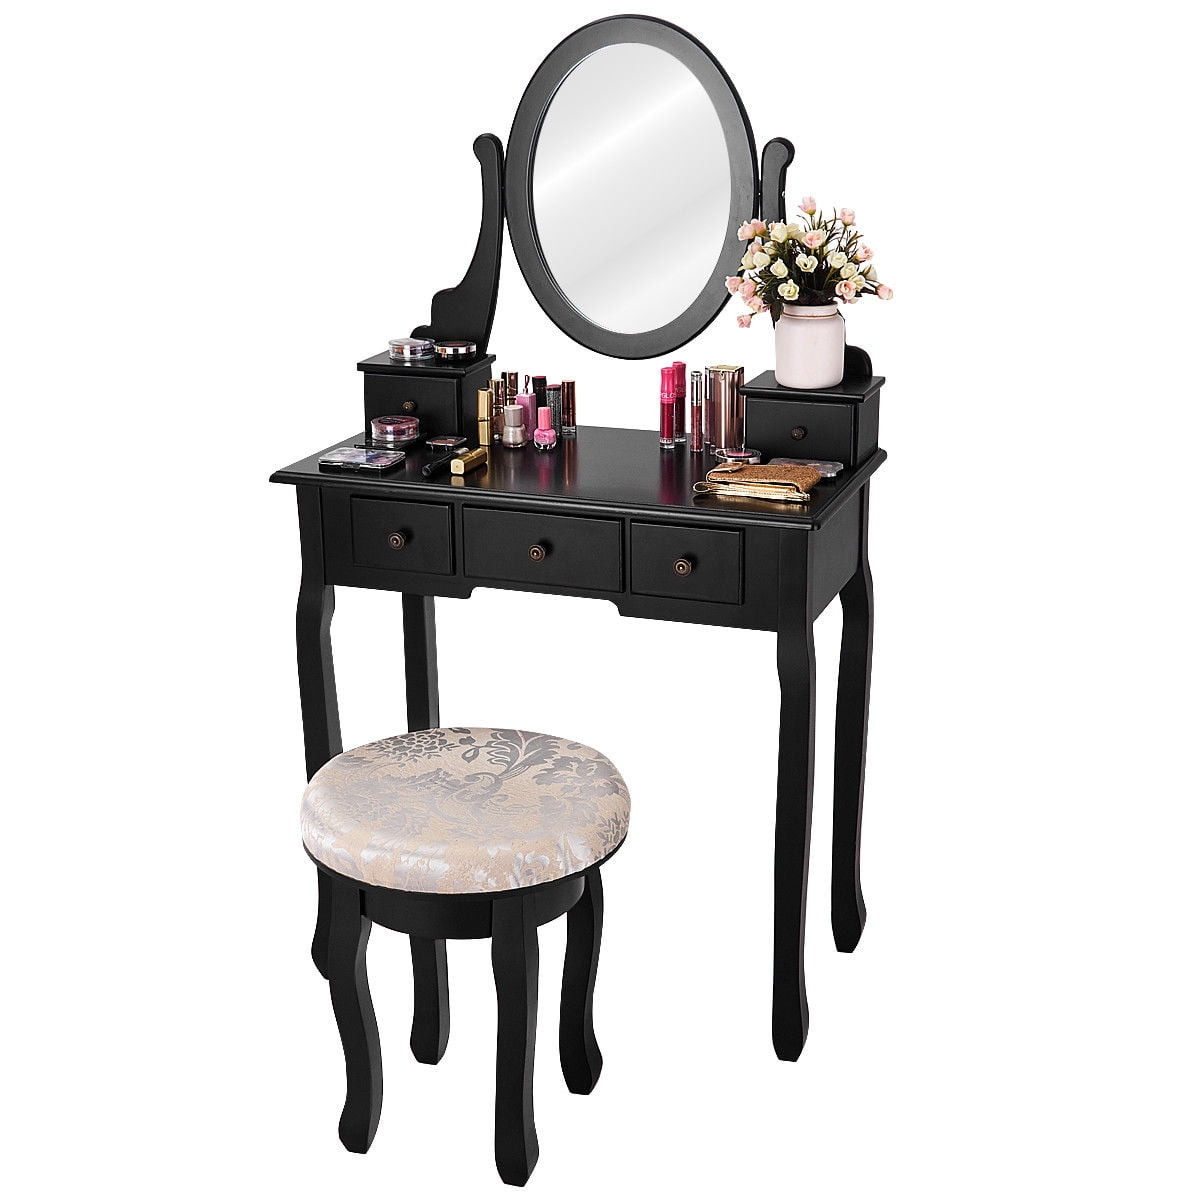 Gymax Black Makeup Table Vanity, Small Black Vanity Table